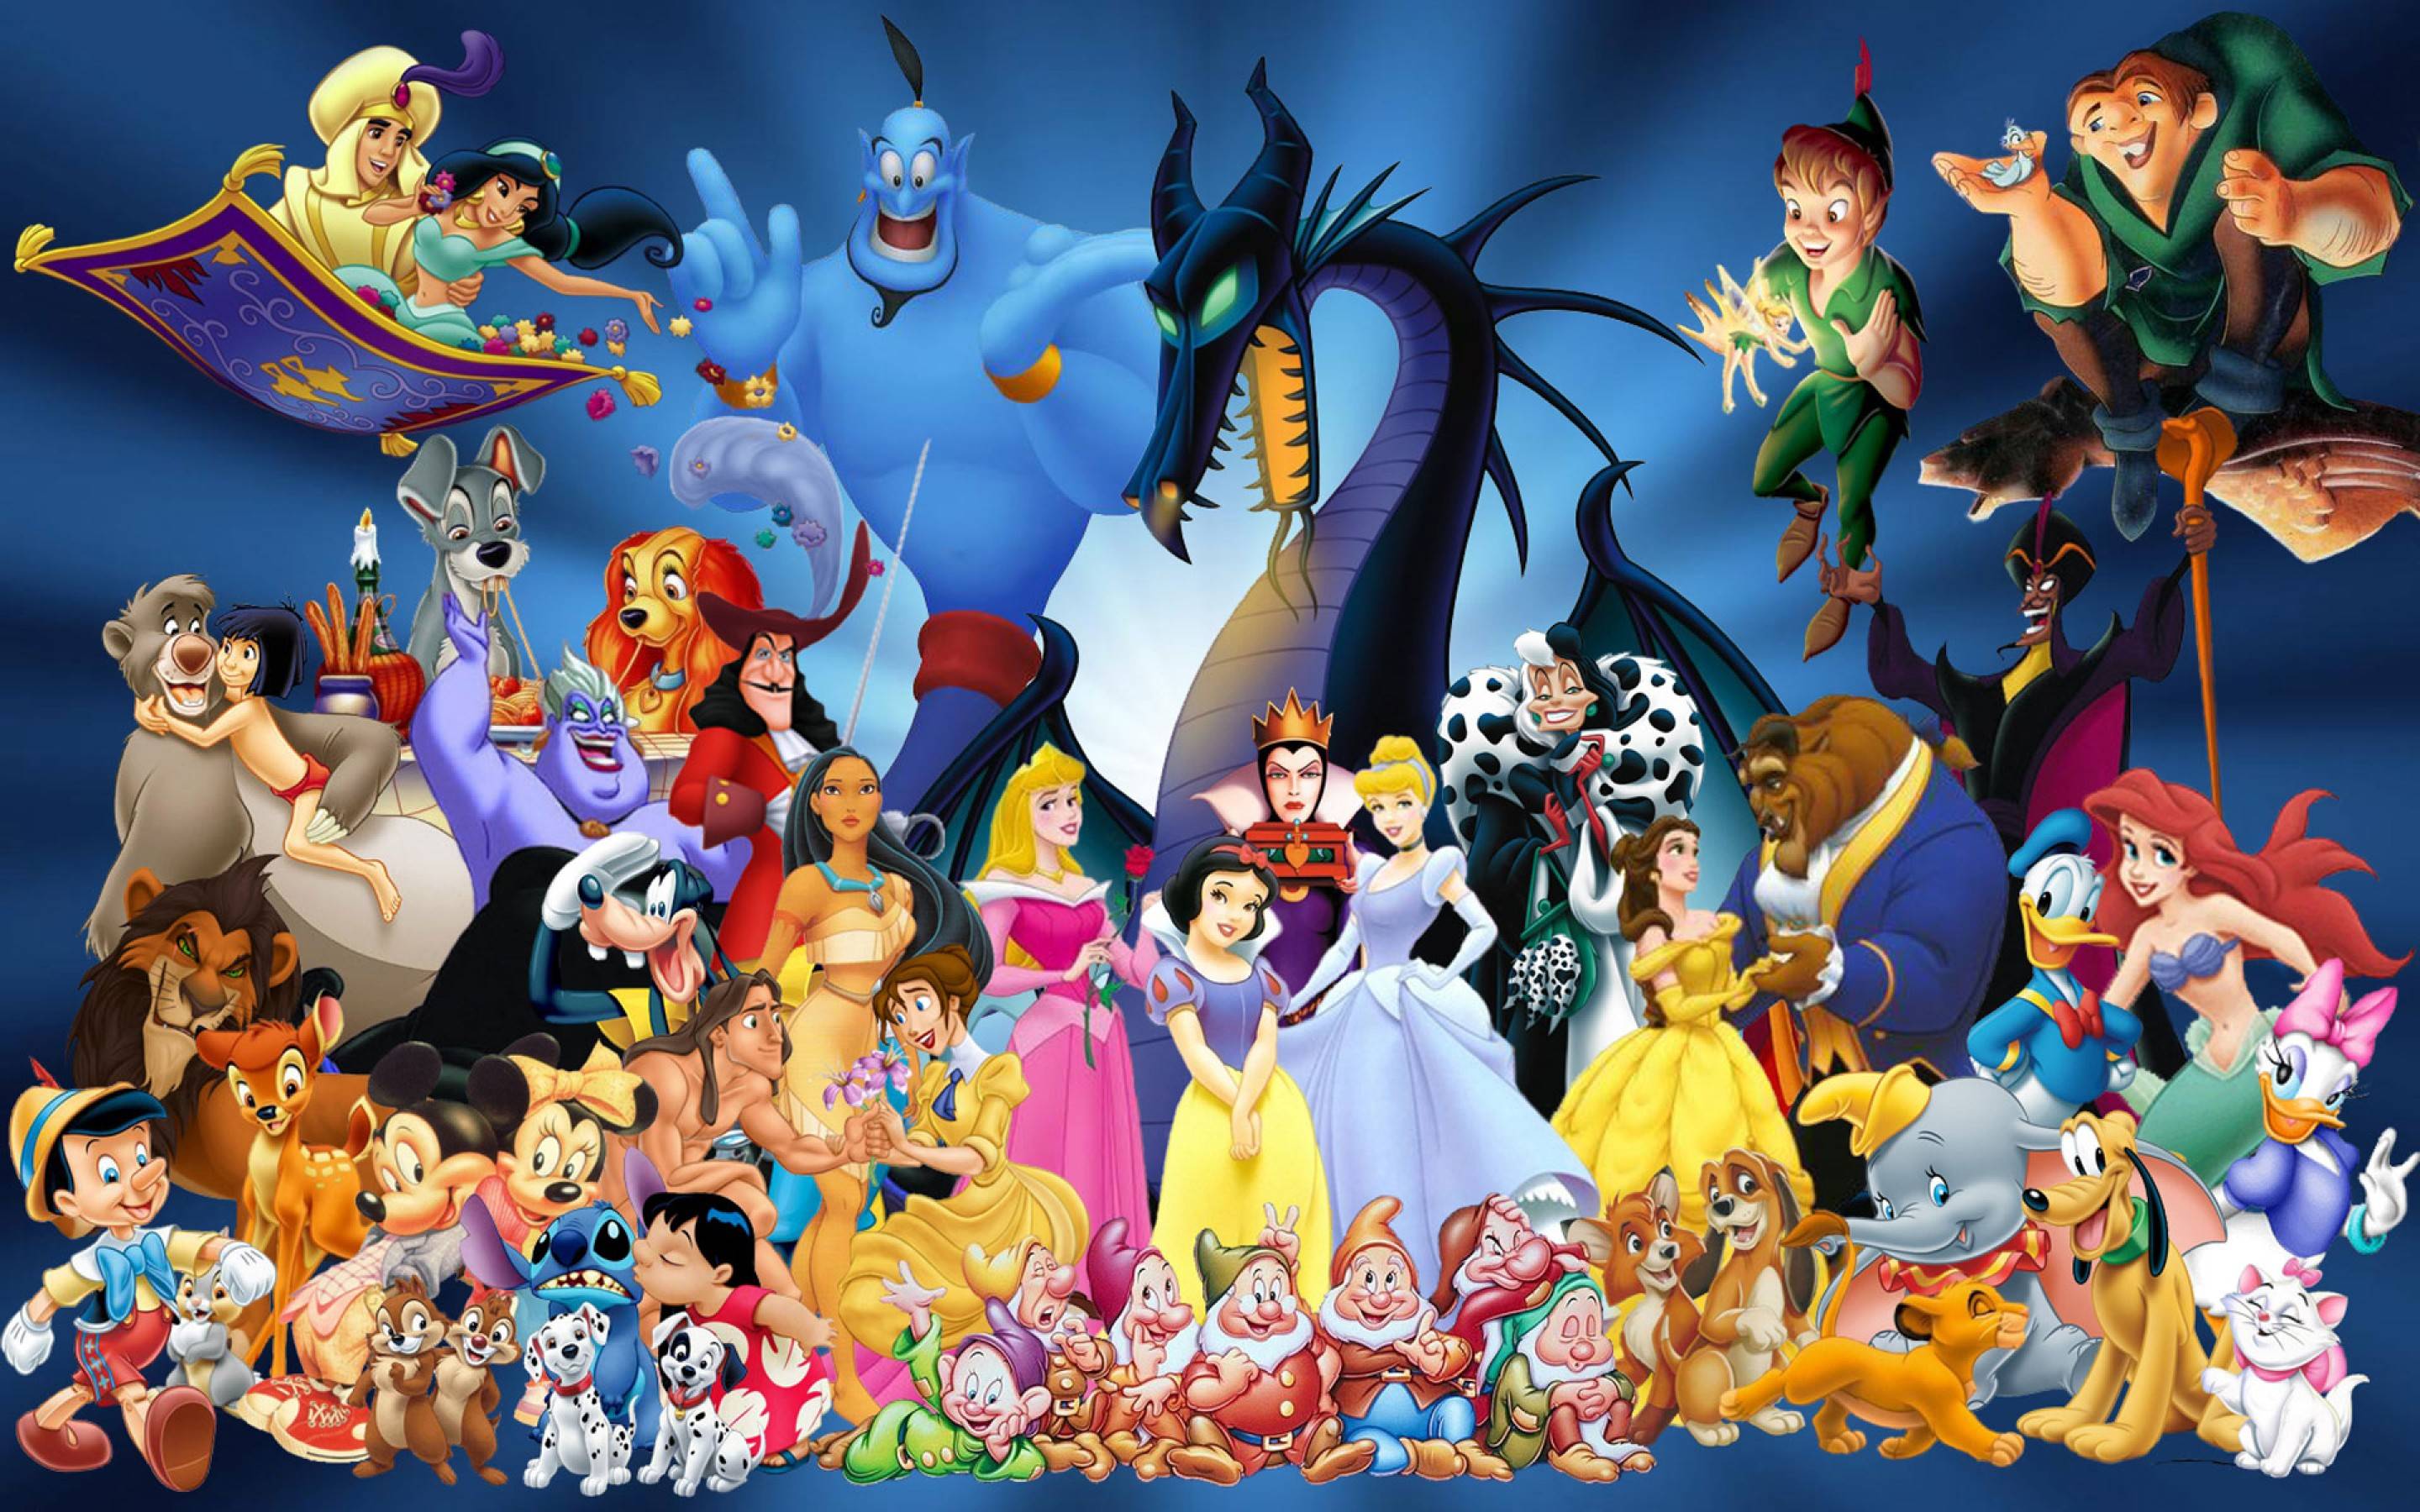 Disney Character Wallpaper. Disney Character Image. Cool